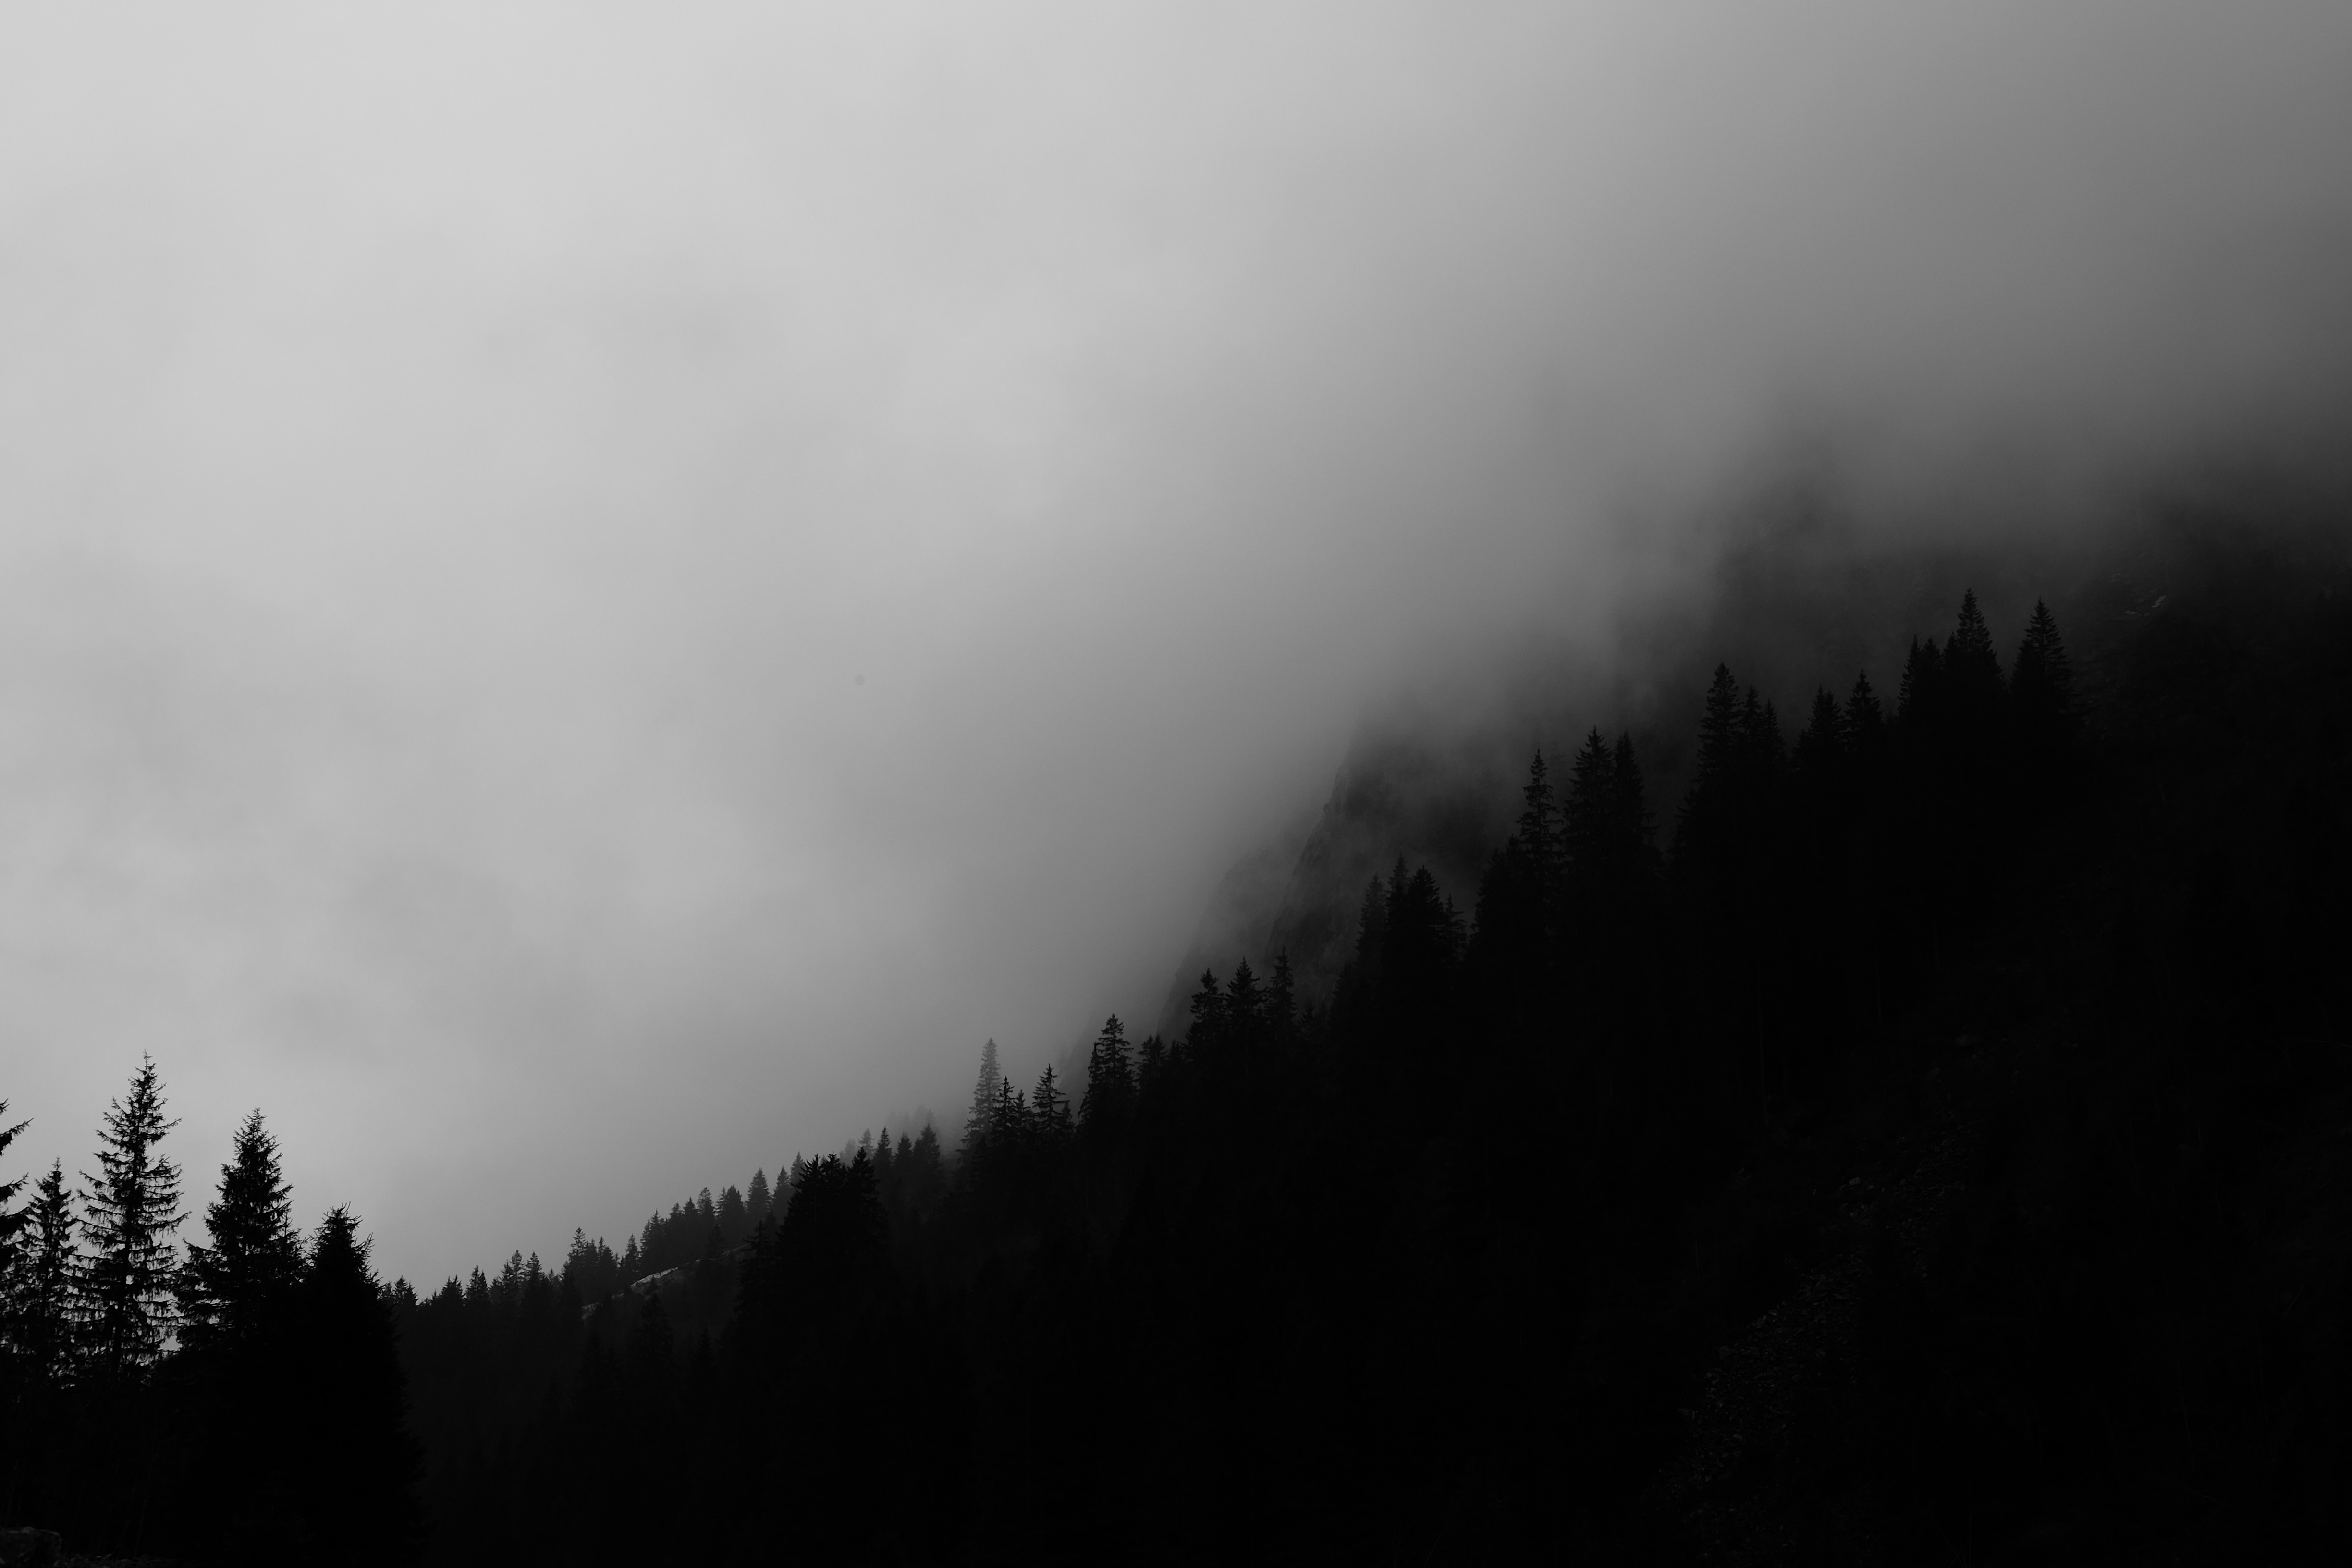 dark, bw, black, trees, forest, fog, chb phone background